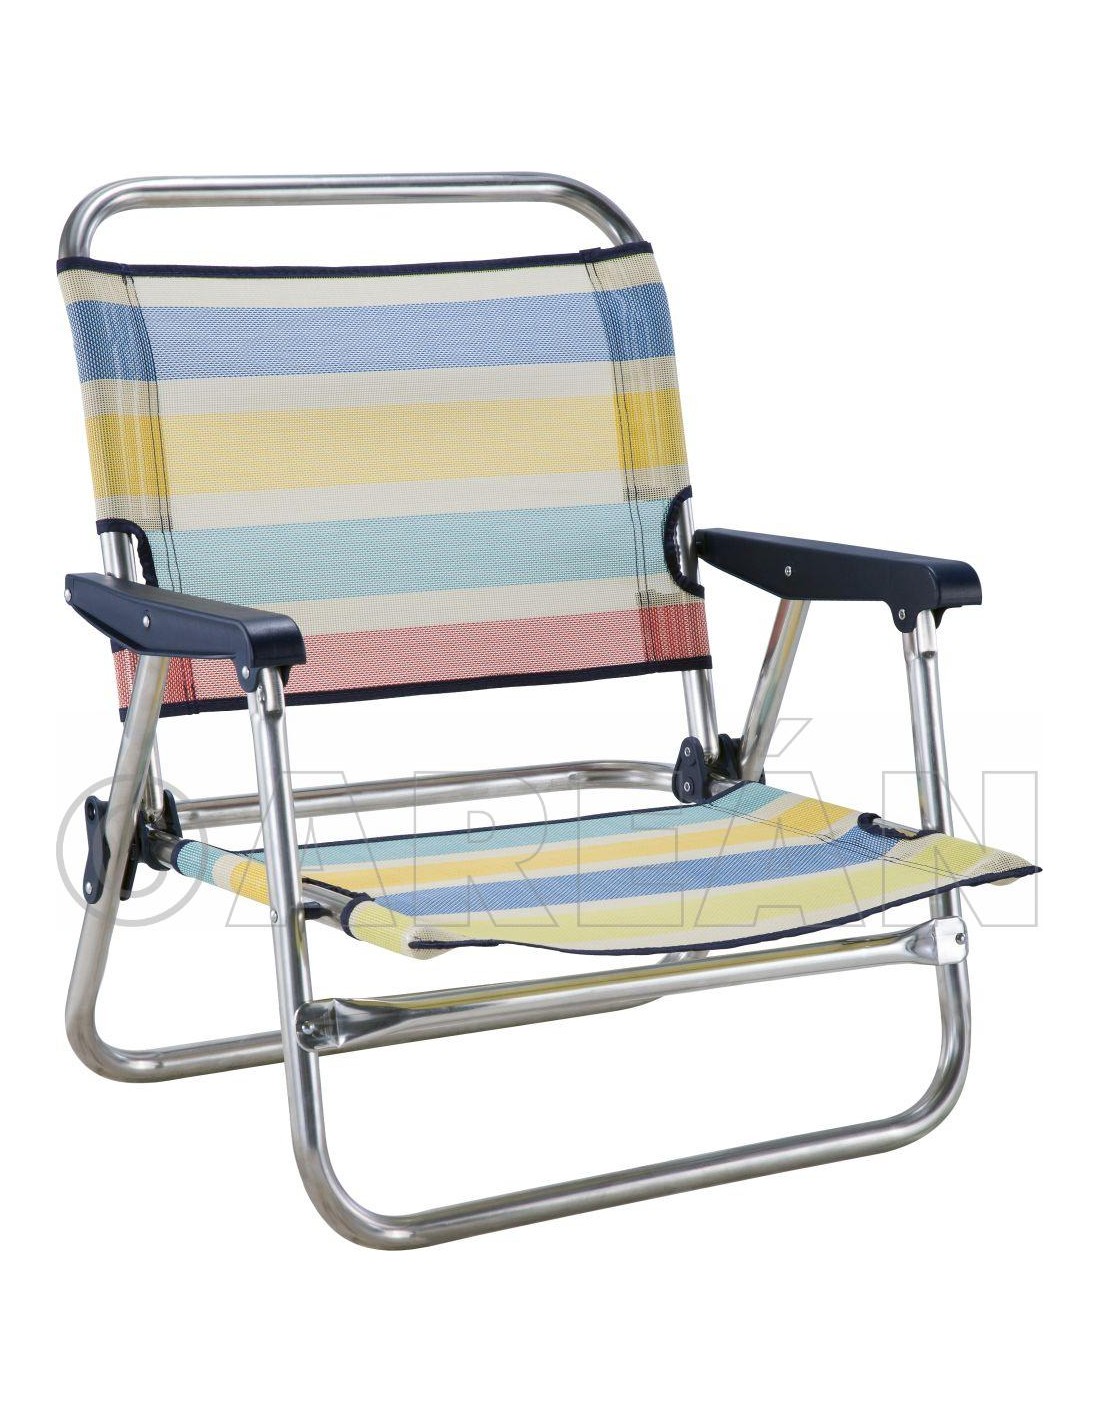 silla de playa baja